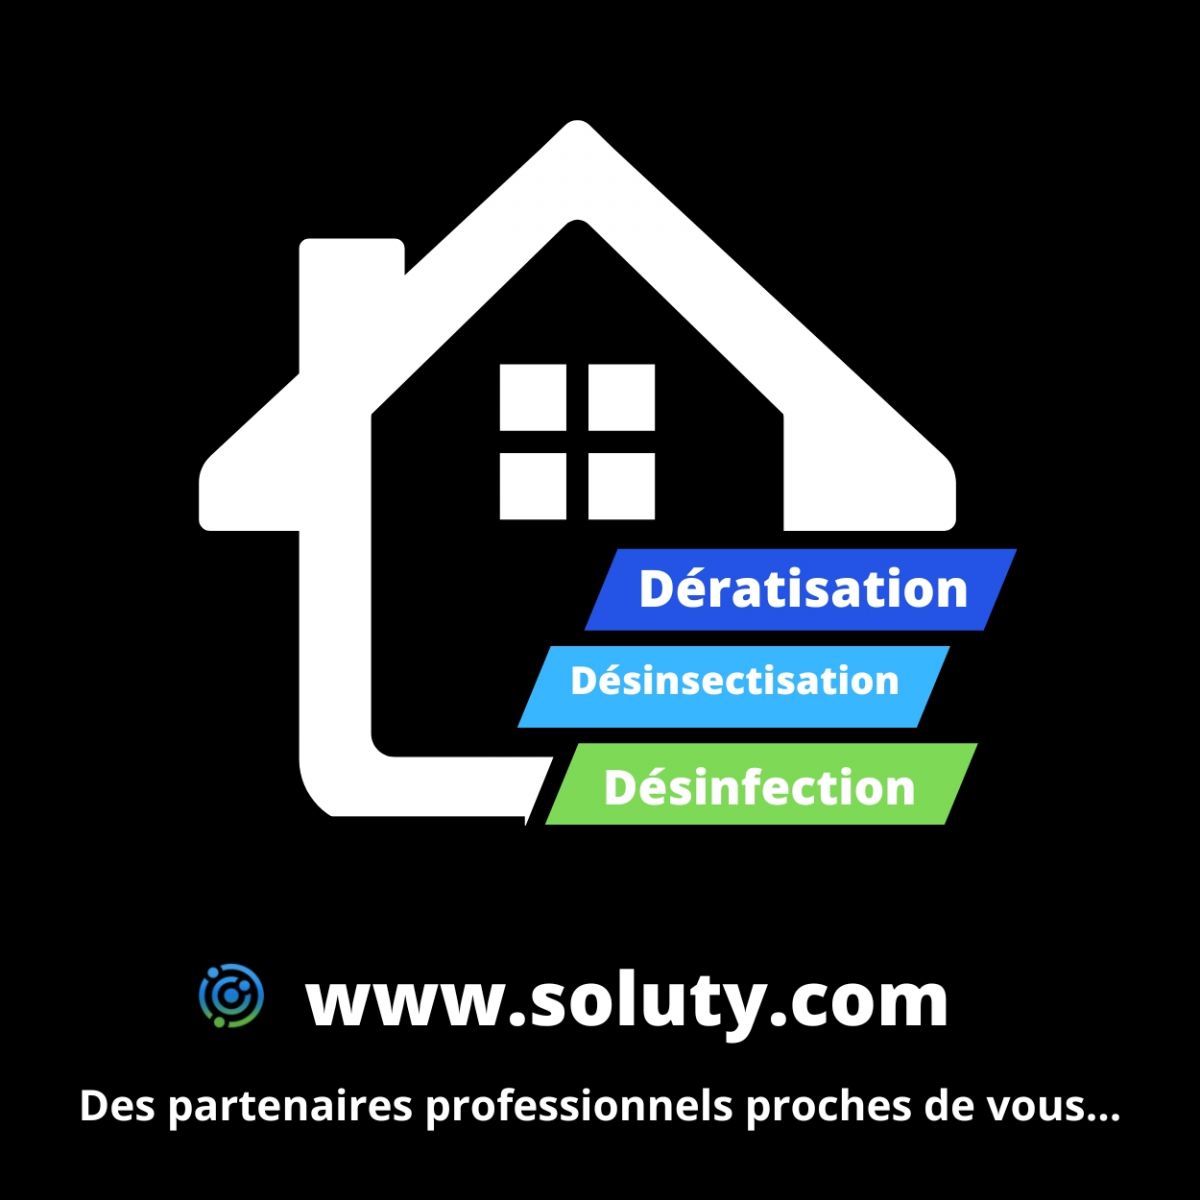 réseau www.soluty.com